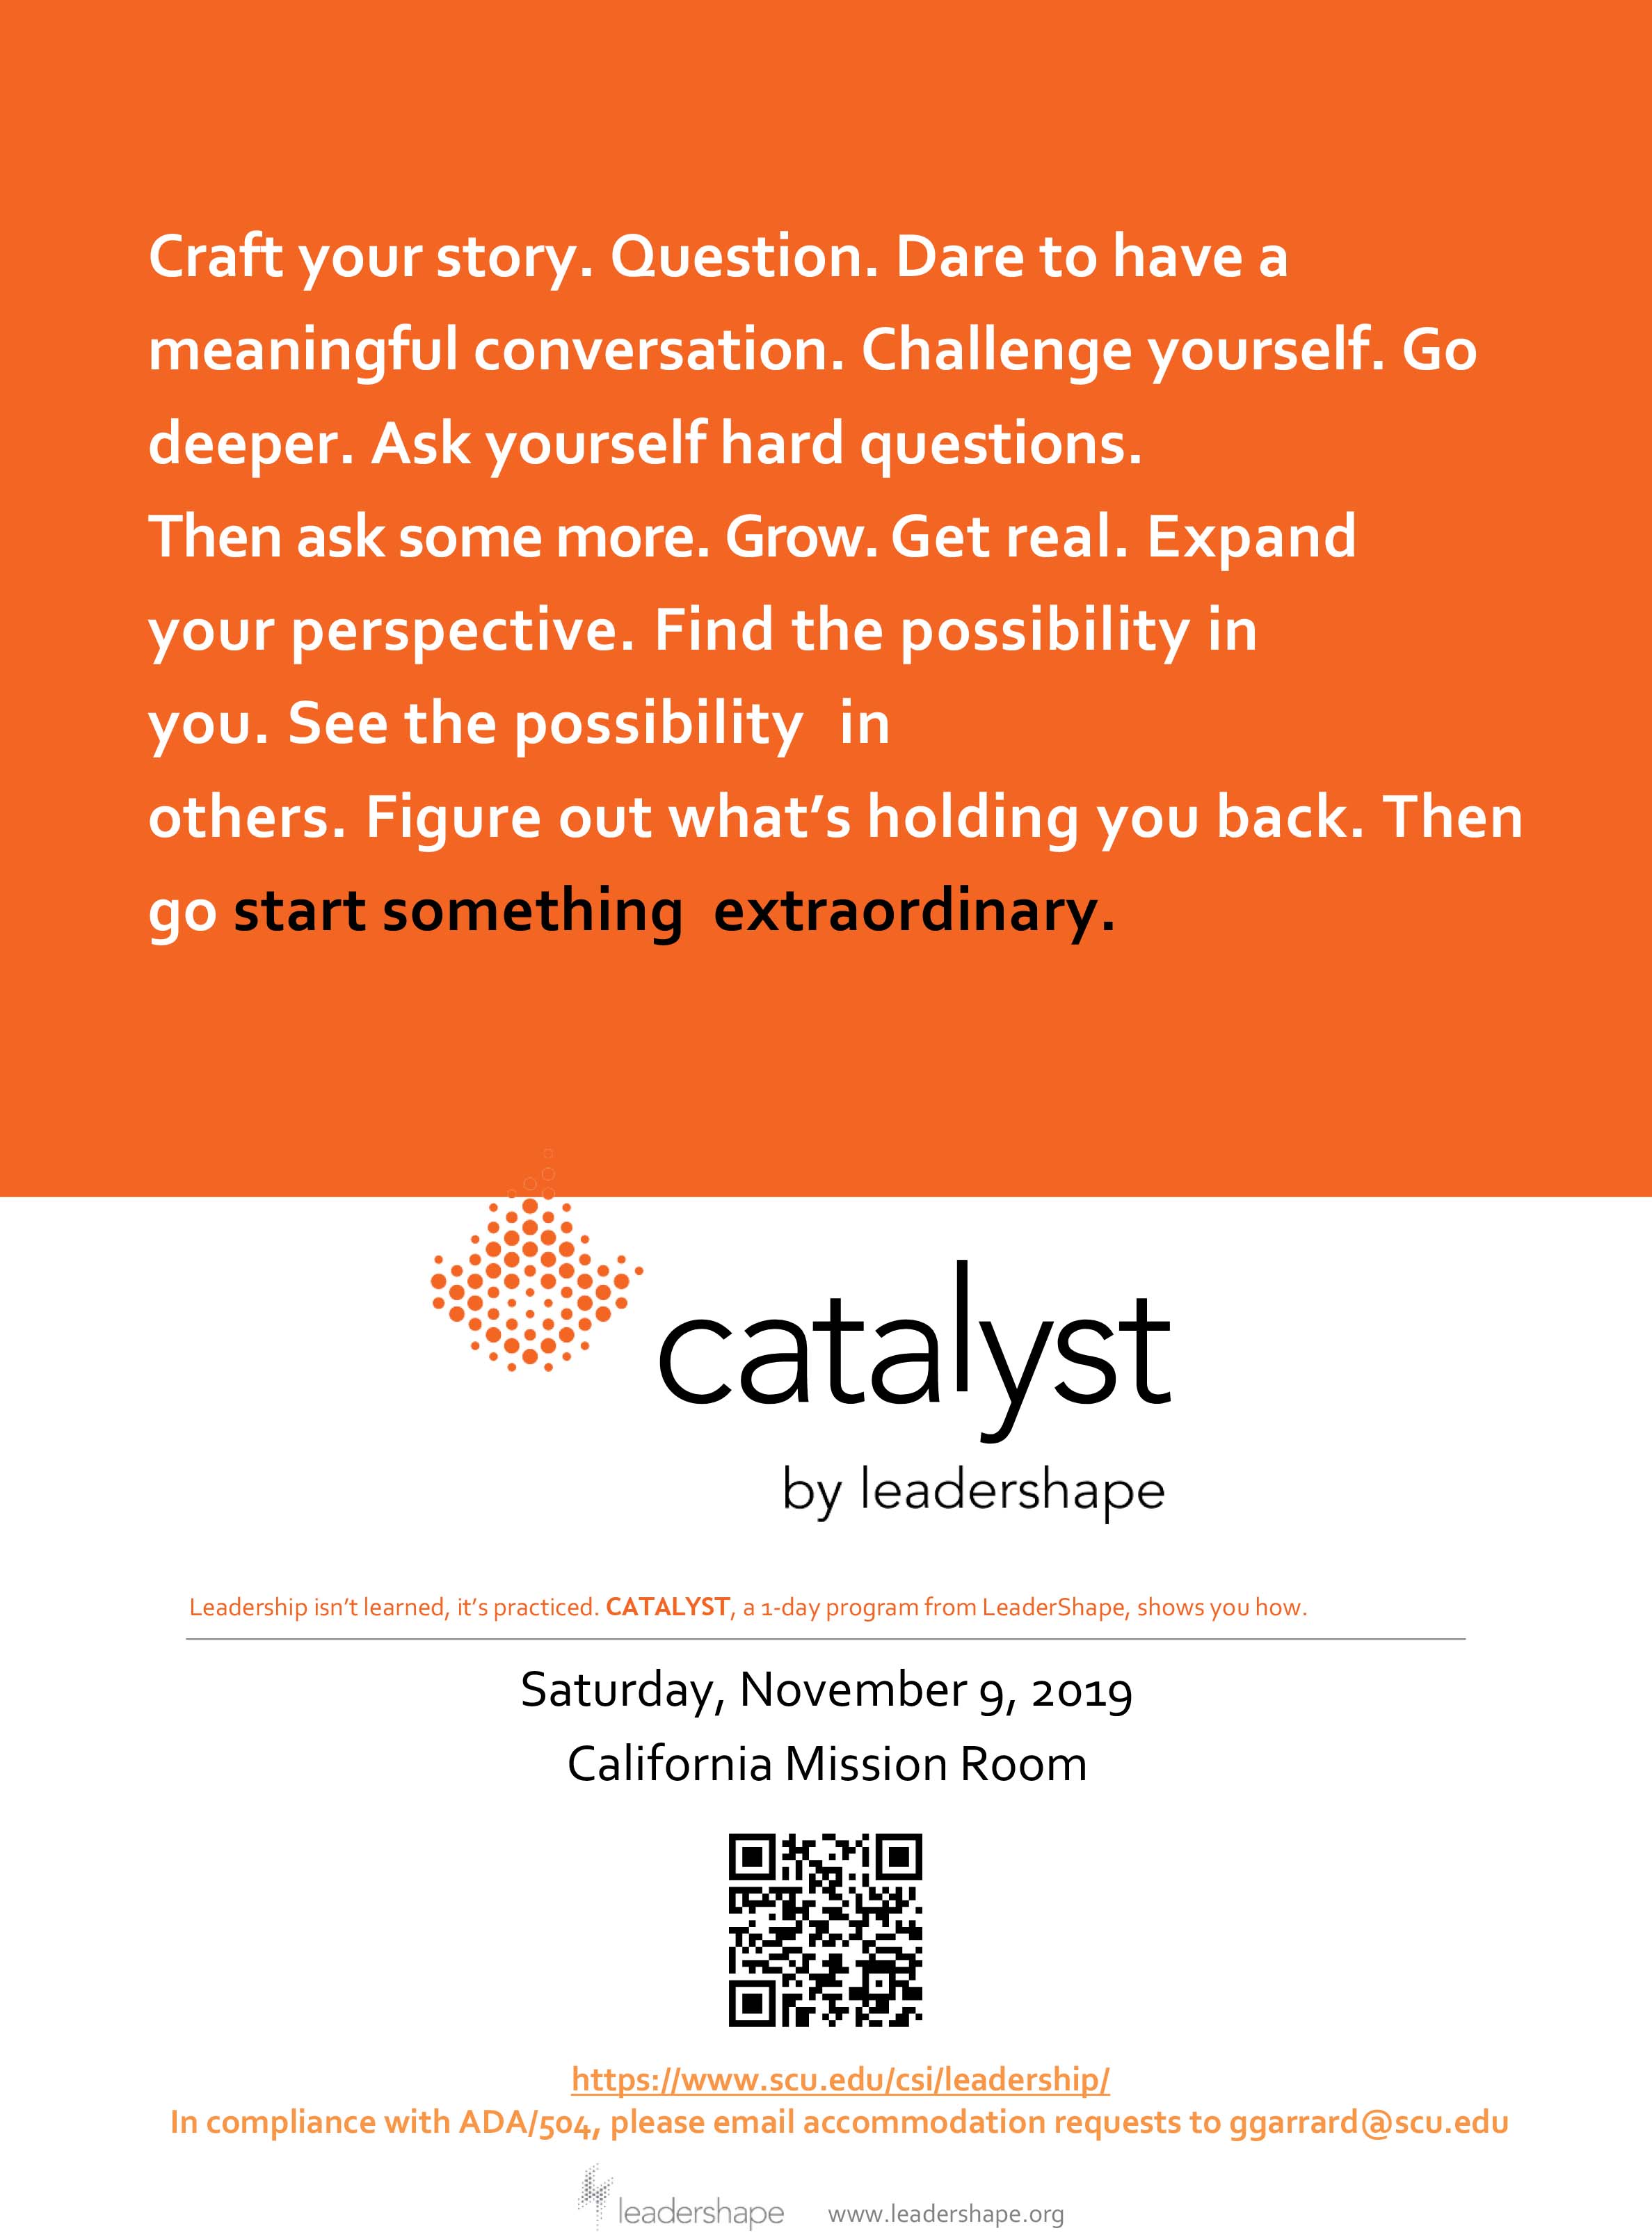 Catalyst by LeaderShape